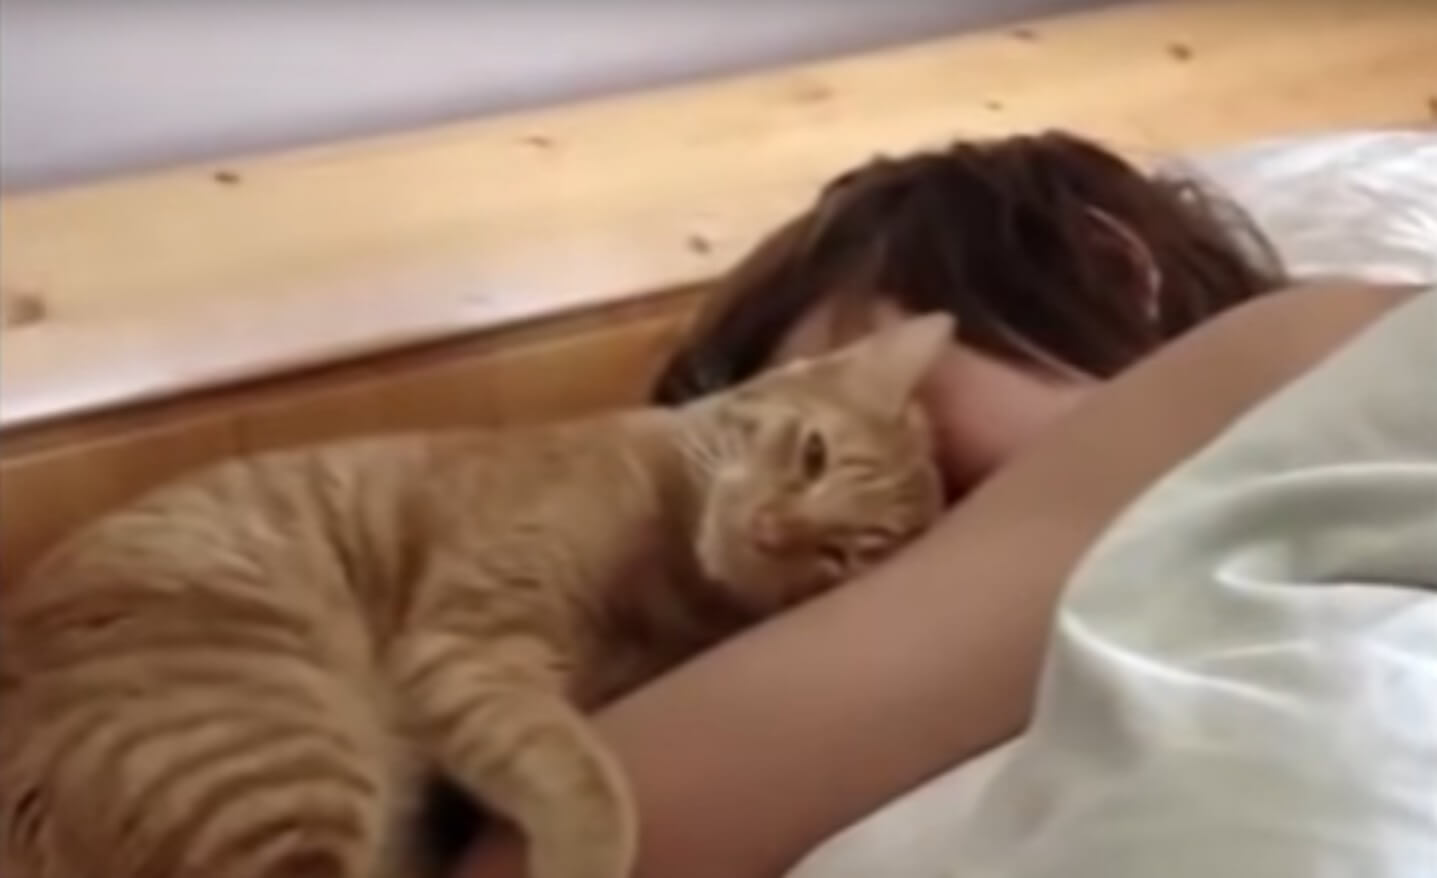 кот спит на кровати с хозяином